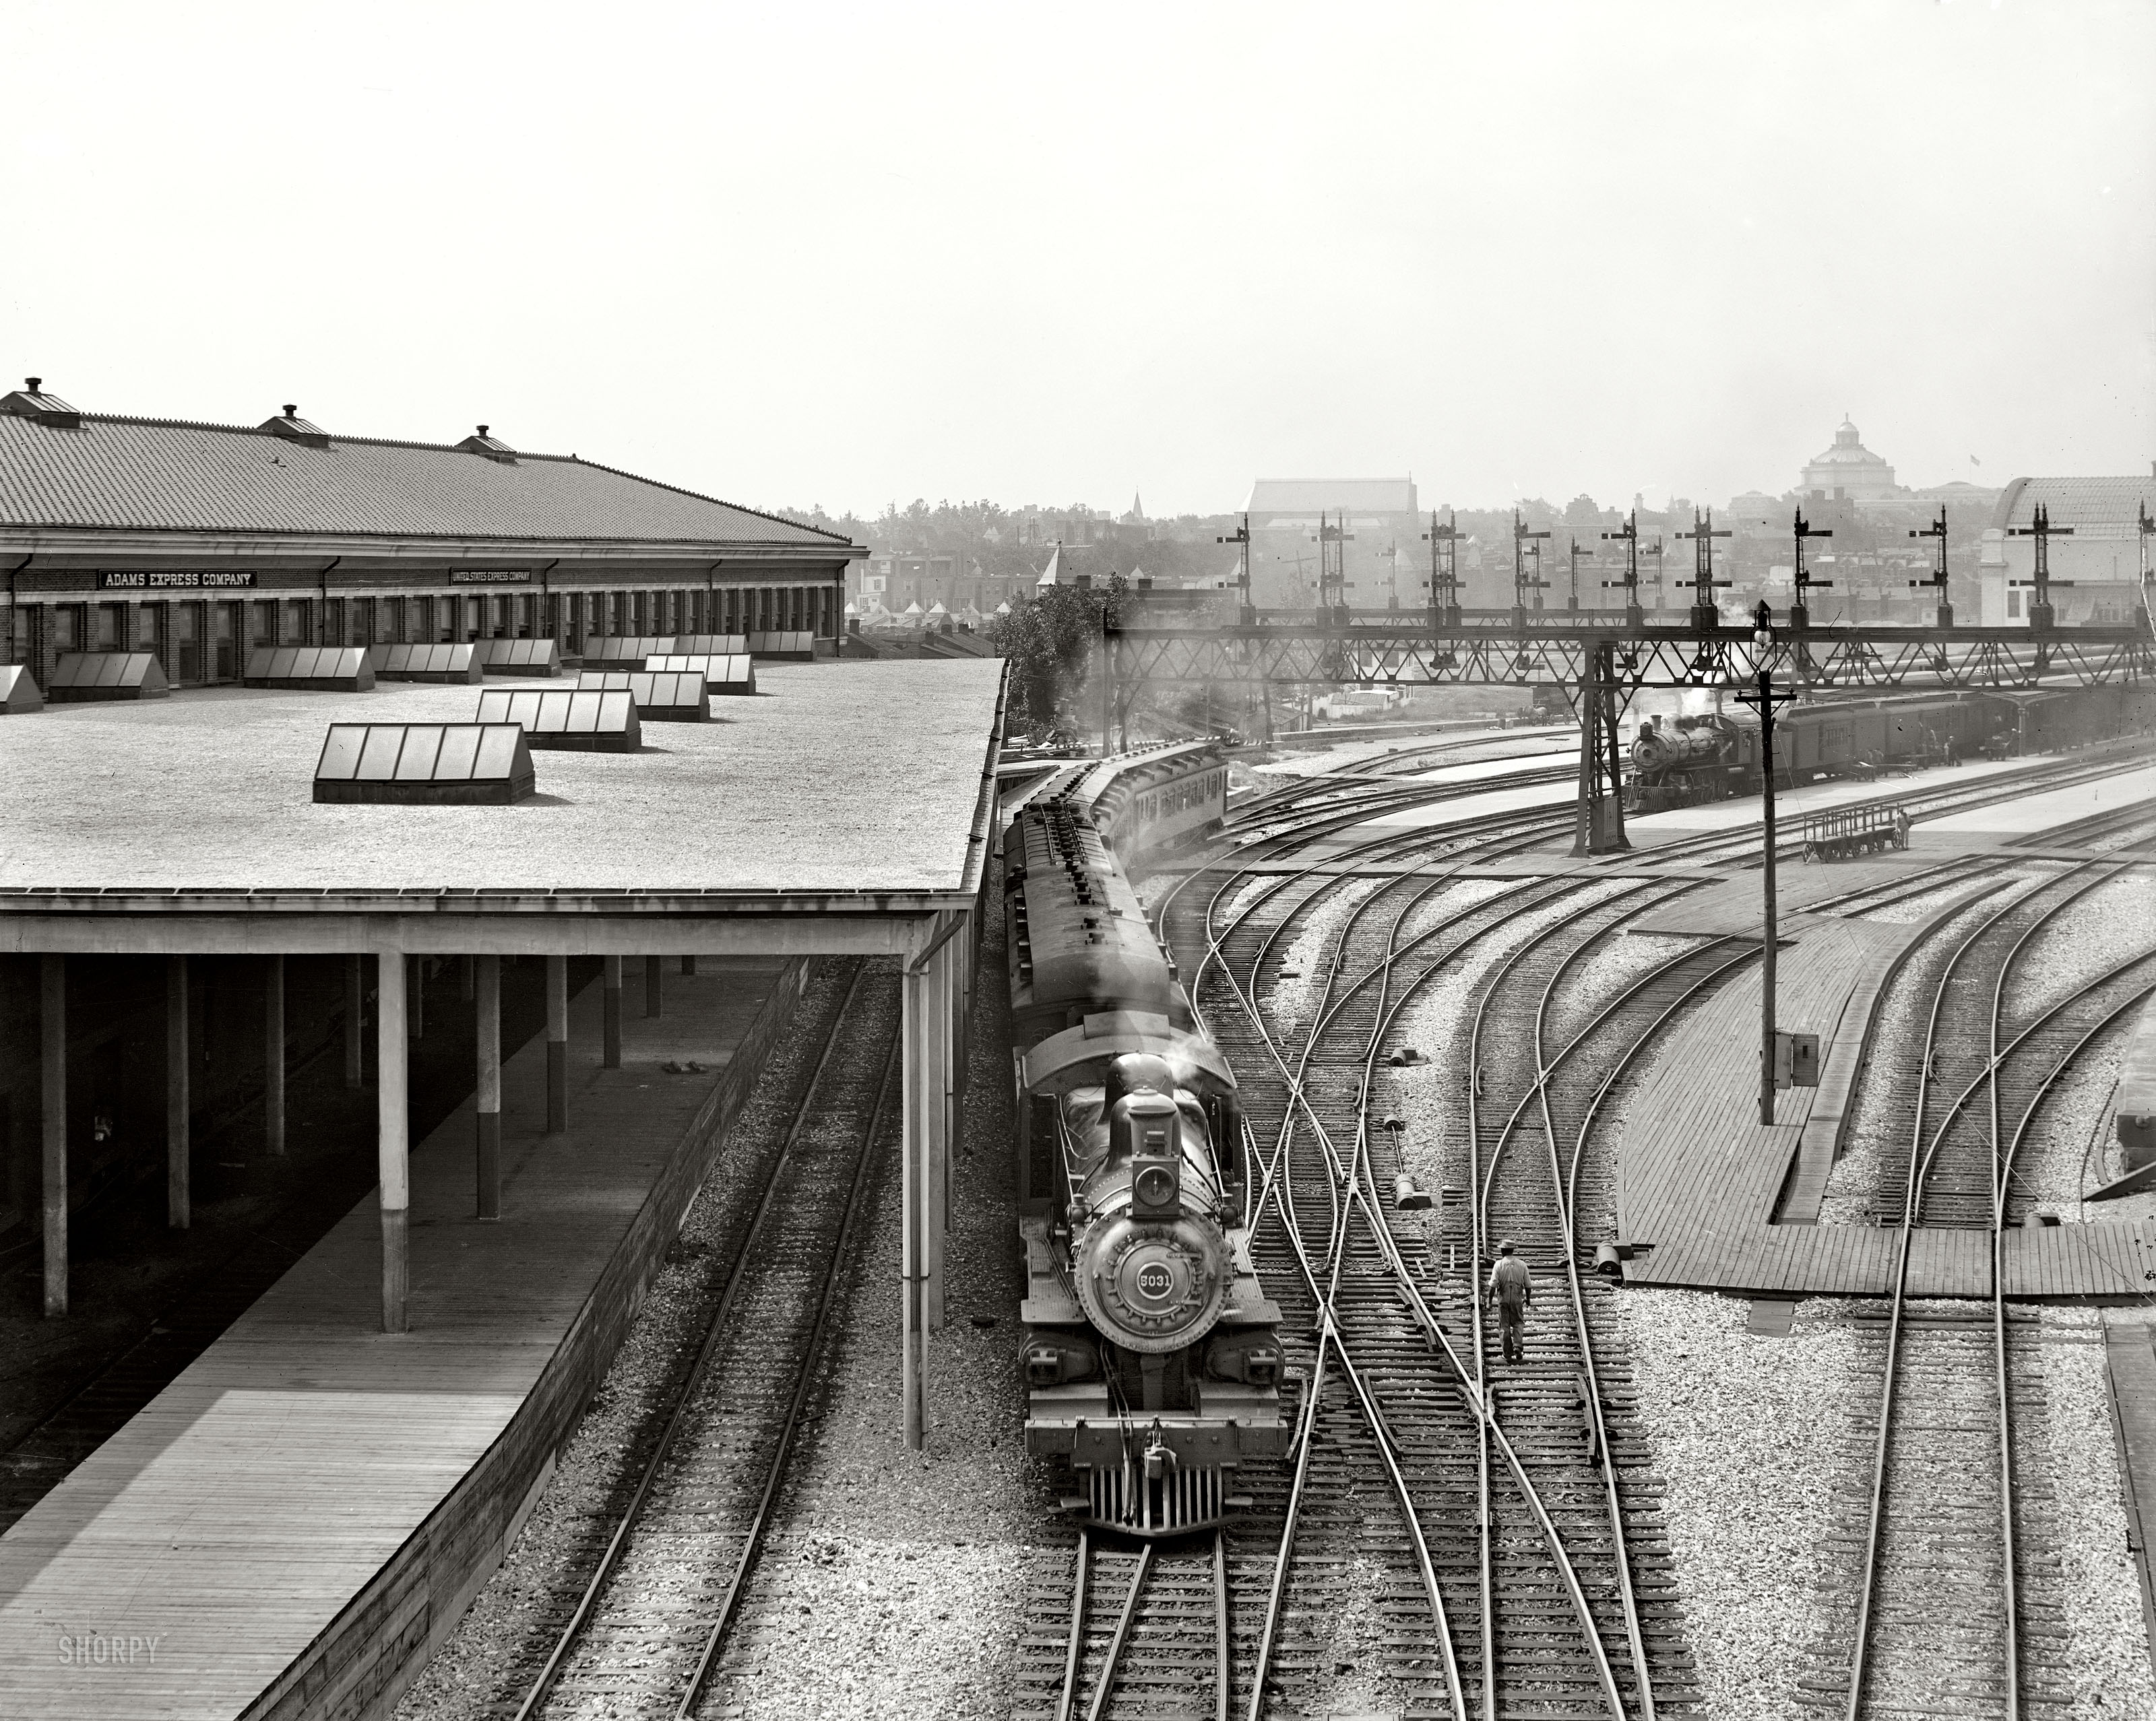 Washington, D.C., c. 1908-1910. "Switch yards, Union Station." Lefthand section of our railyard panorama. Detroit Publishing glass negative. View full size.